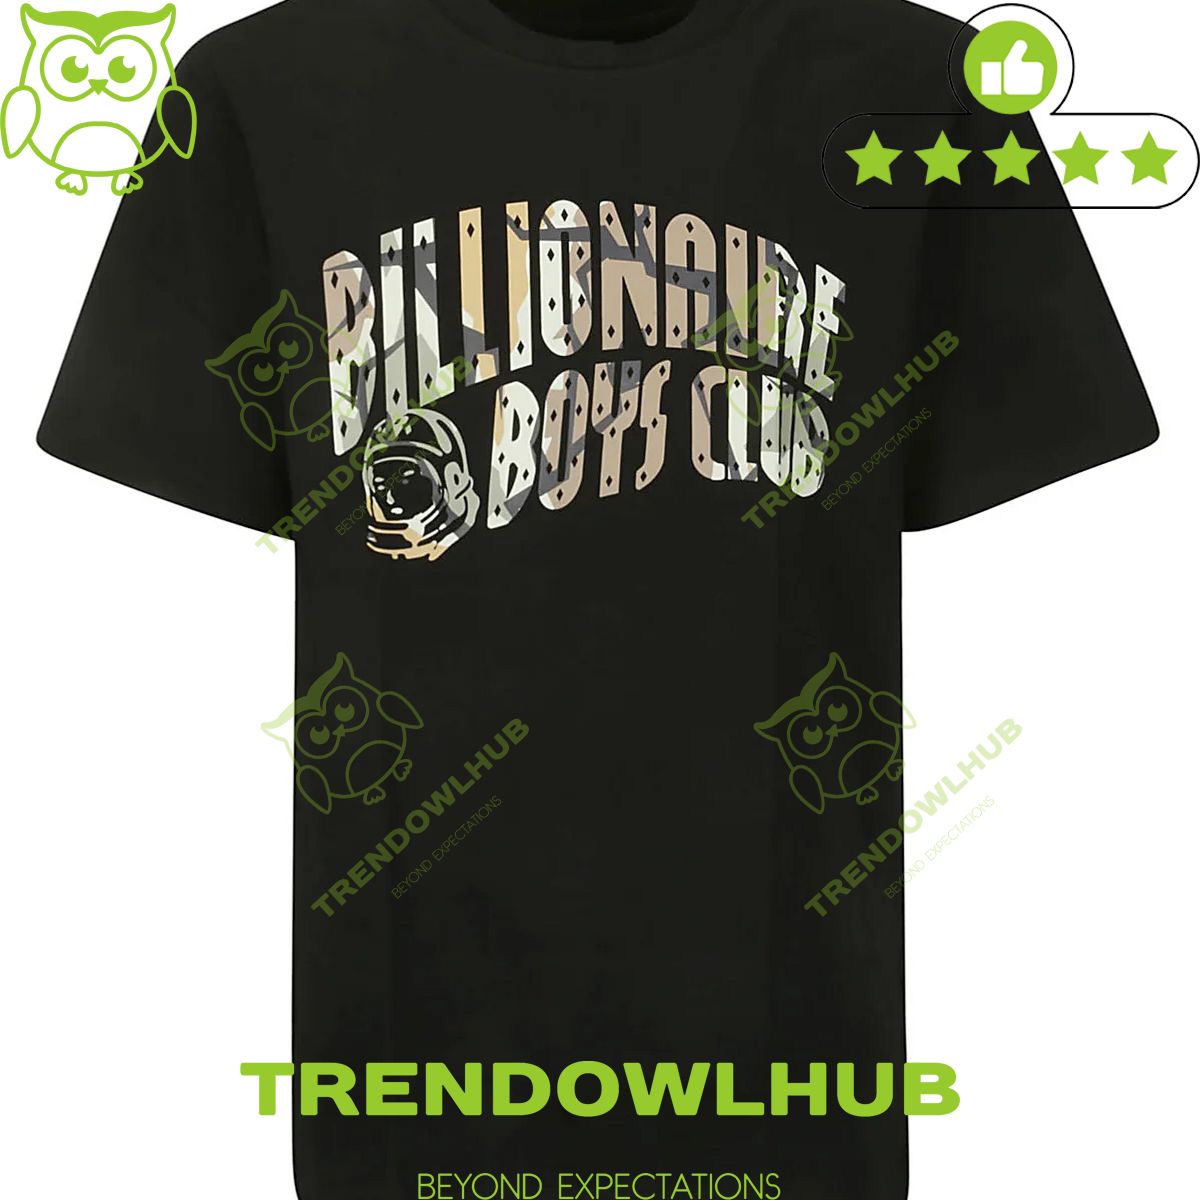 Billionaire Boys Club 2018 Film t shirt